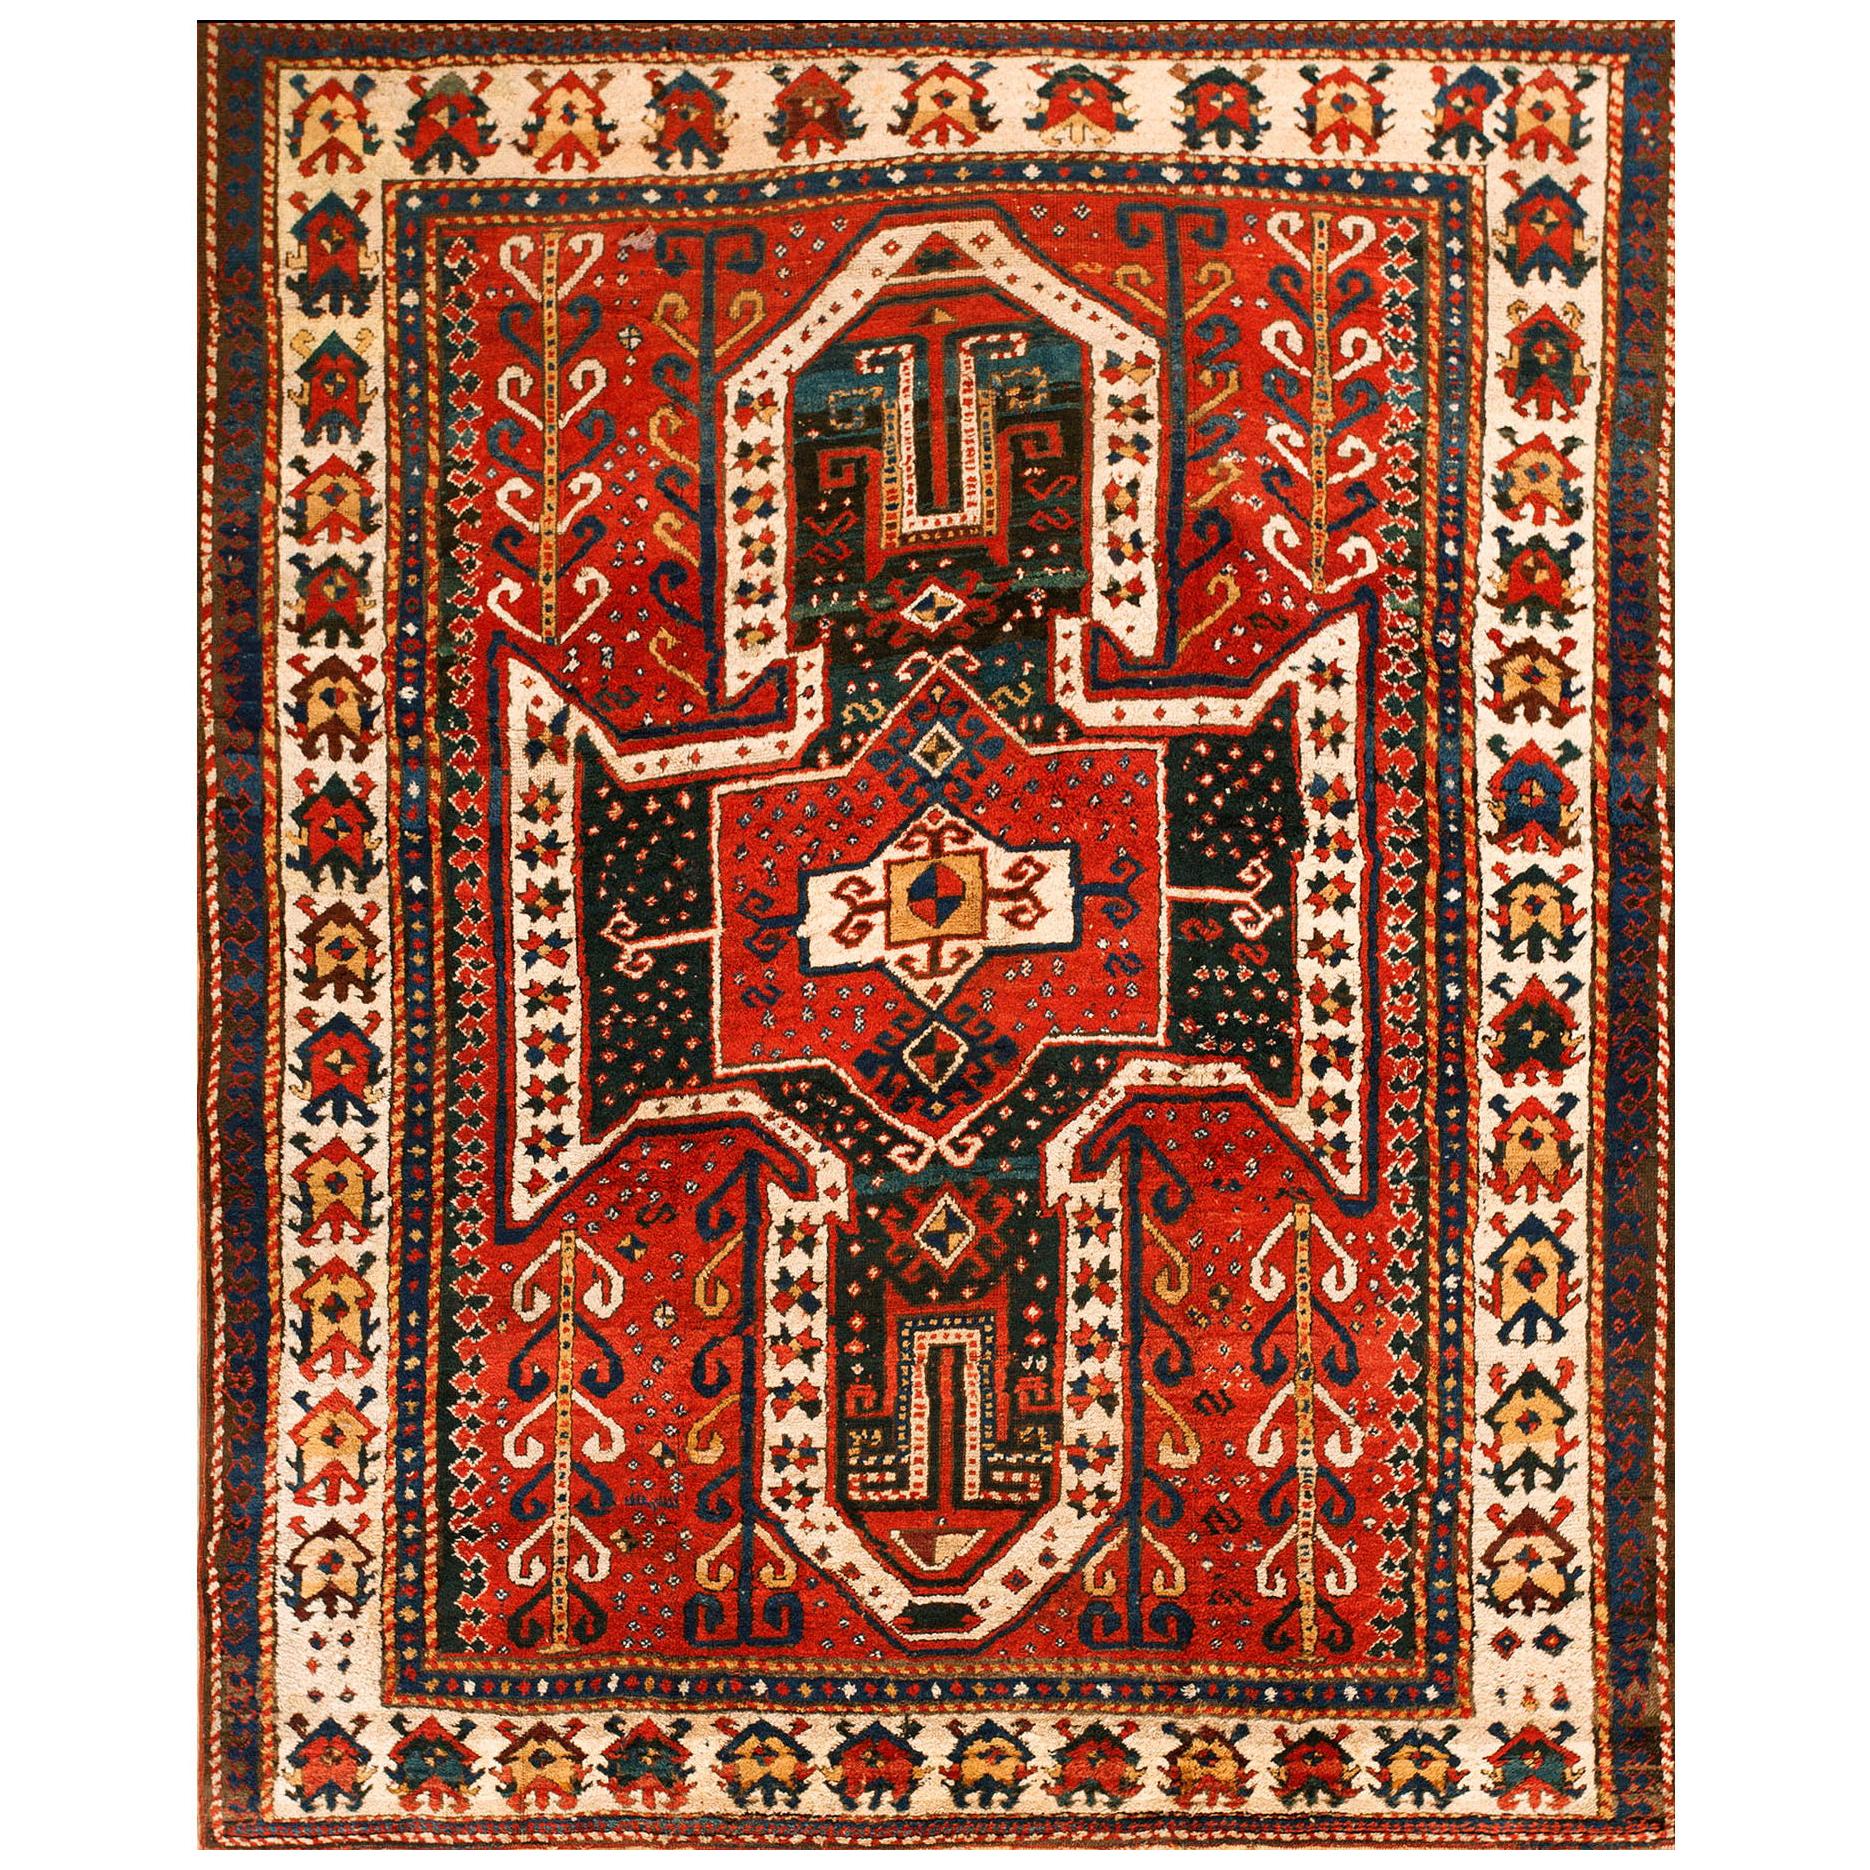 Kaukasischer Sewan-Kaukasischer Teppich aus dem 19. Jahrhundert ( 5'10"  x 6'10" - 177 x 208 )